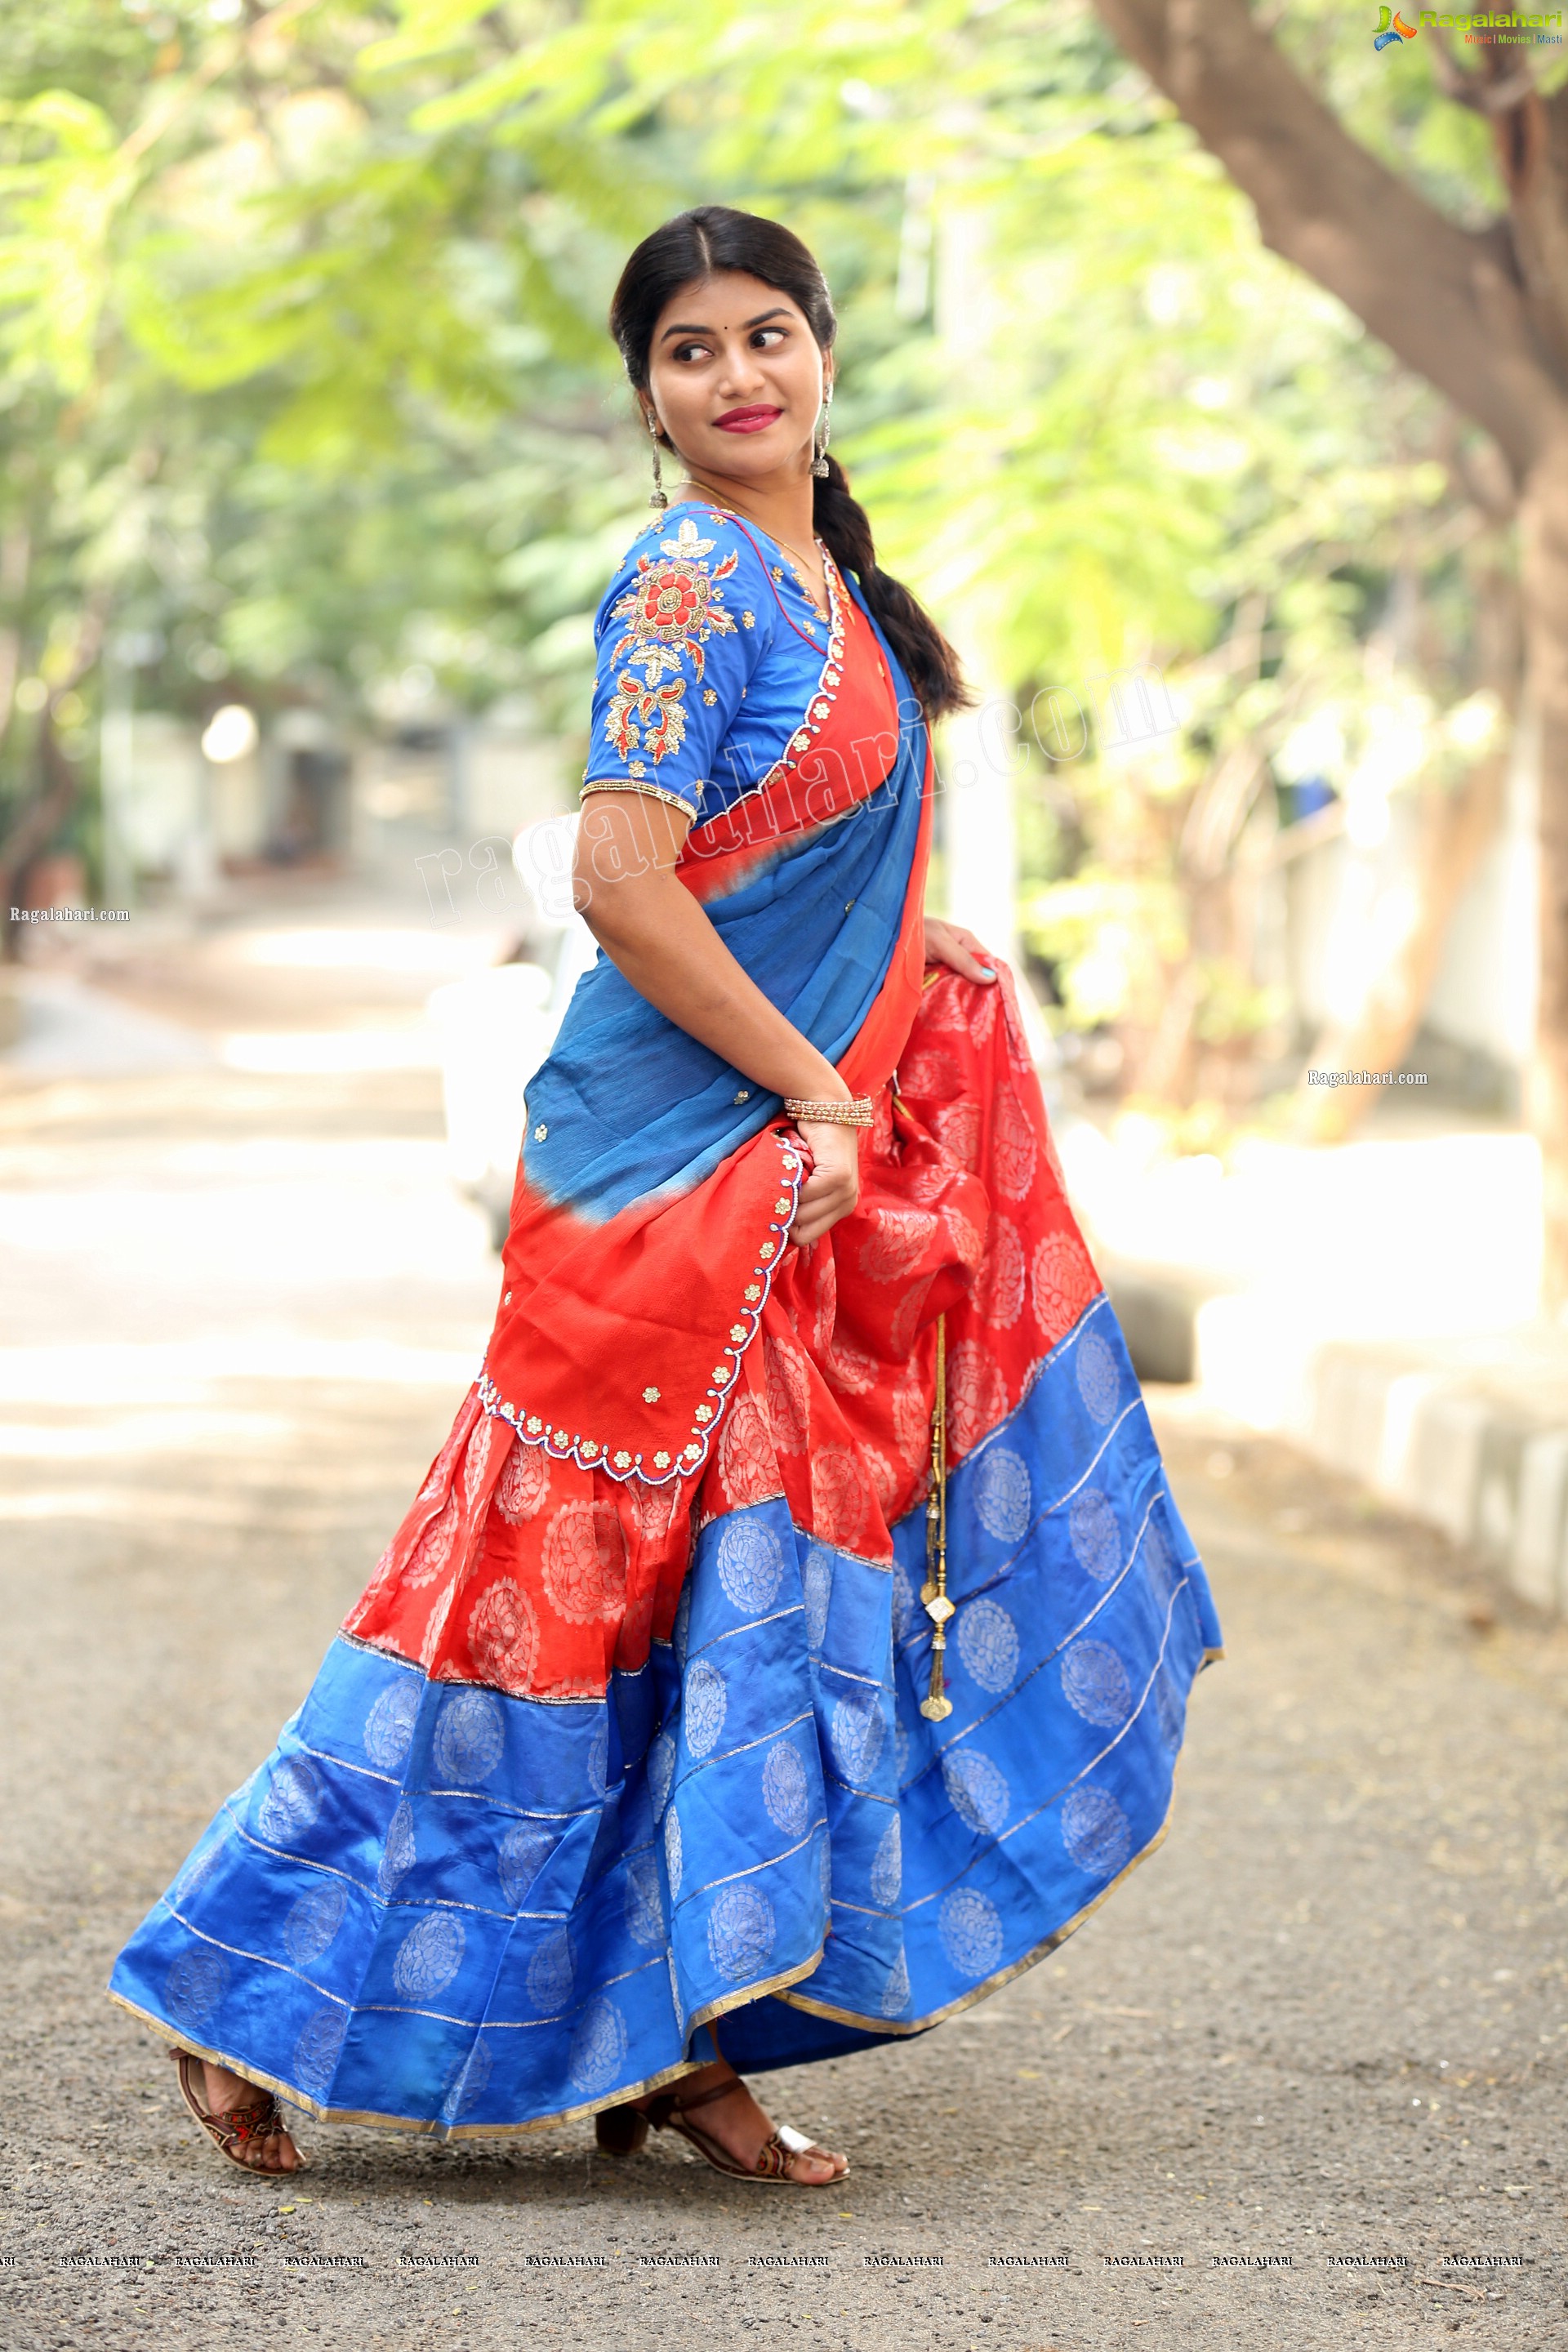 Kirthana Shiny in Blue Lehenga Choli, Exclusive Photo Shoot